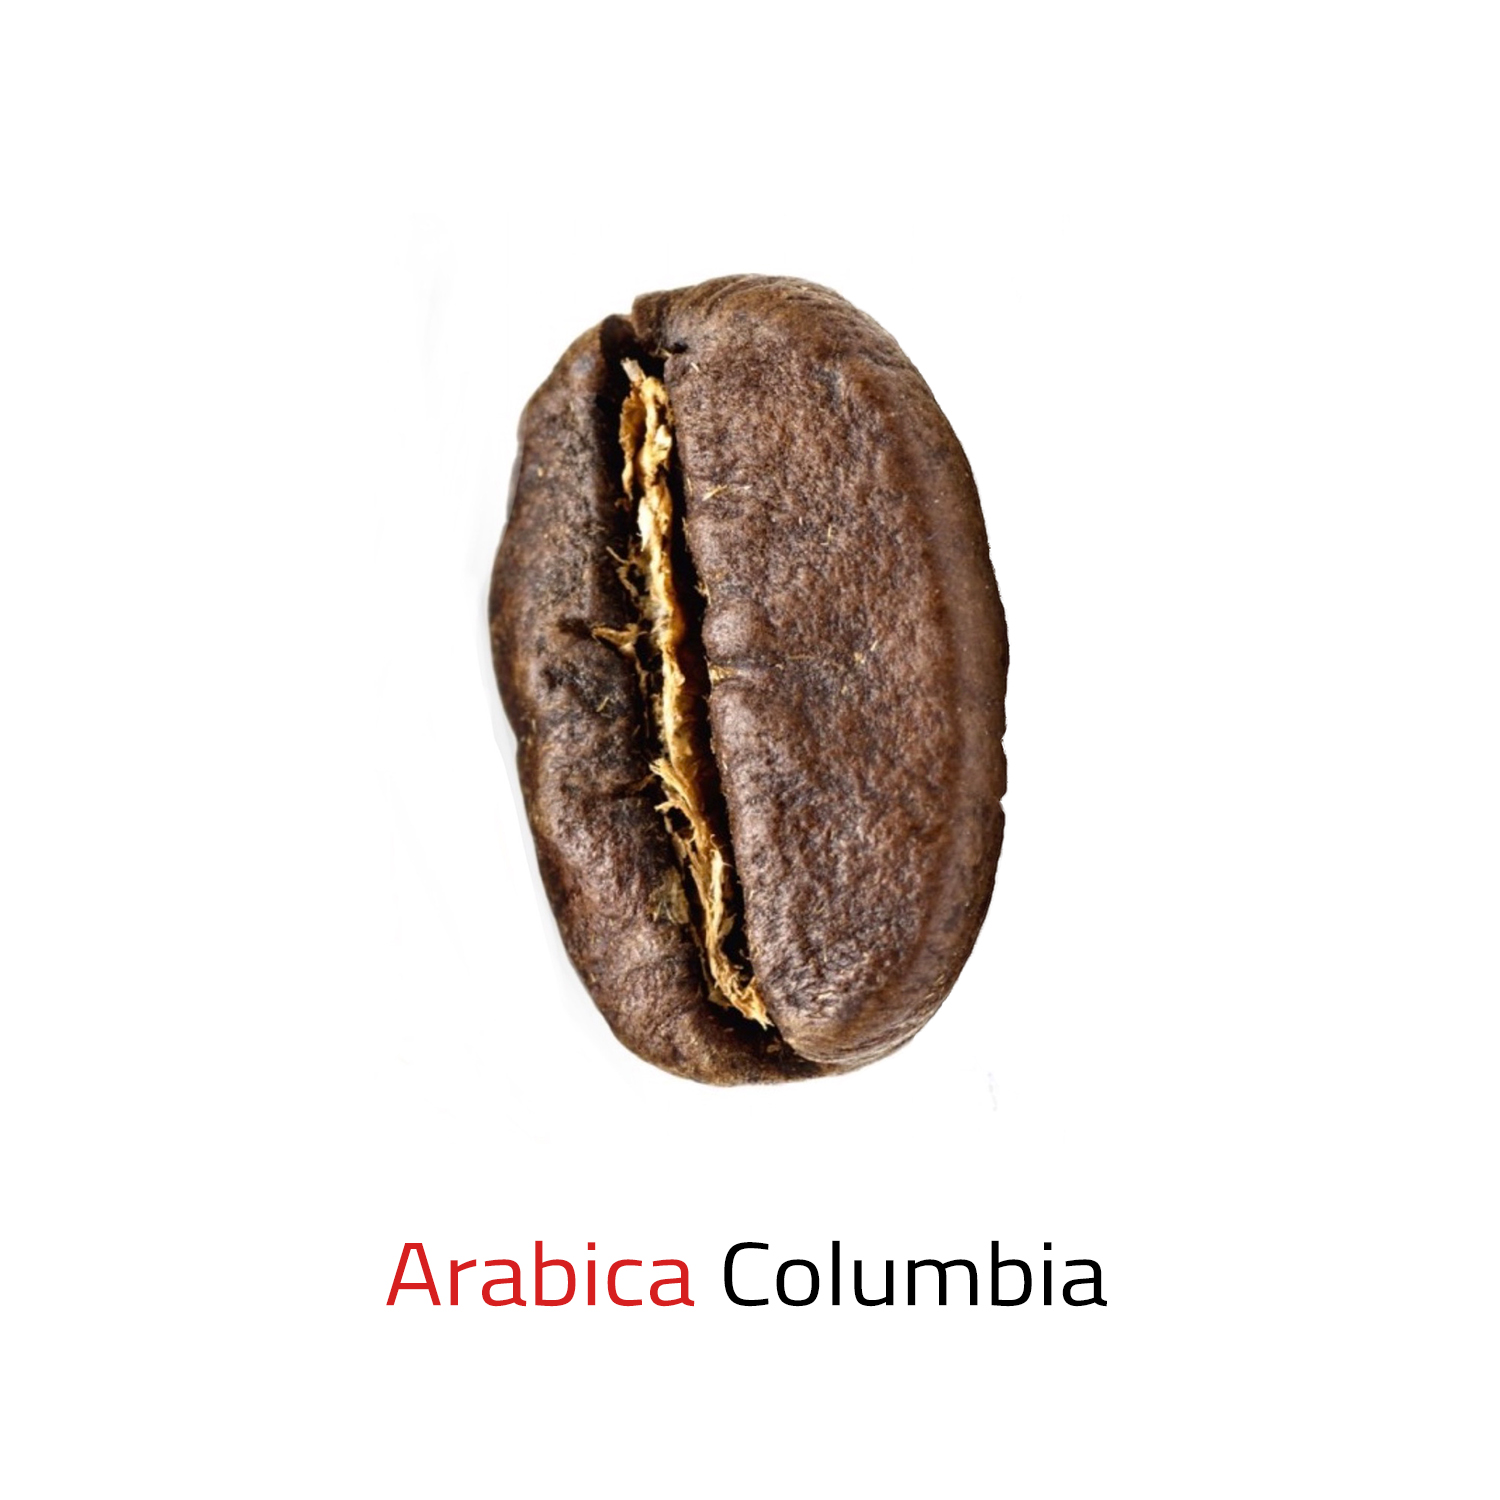 Arabica Columbia 250g